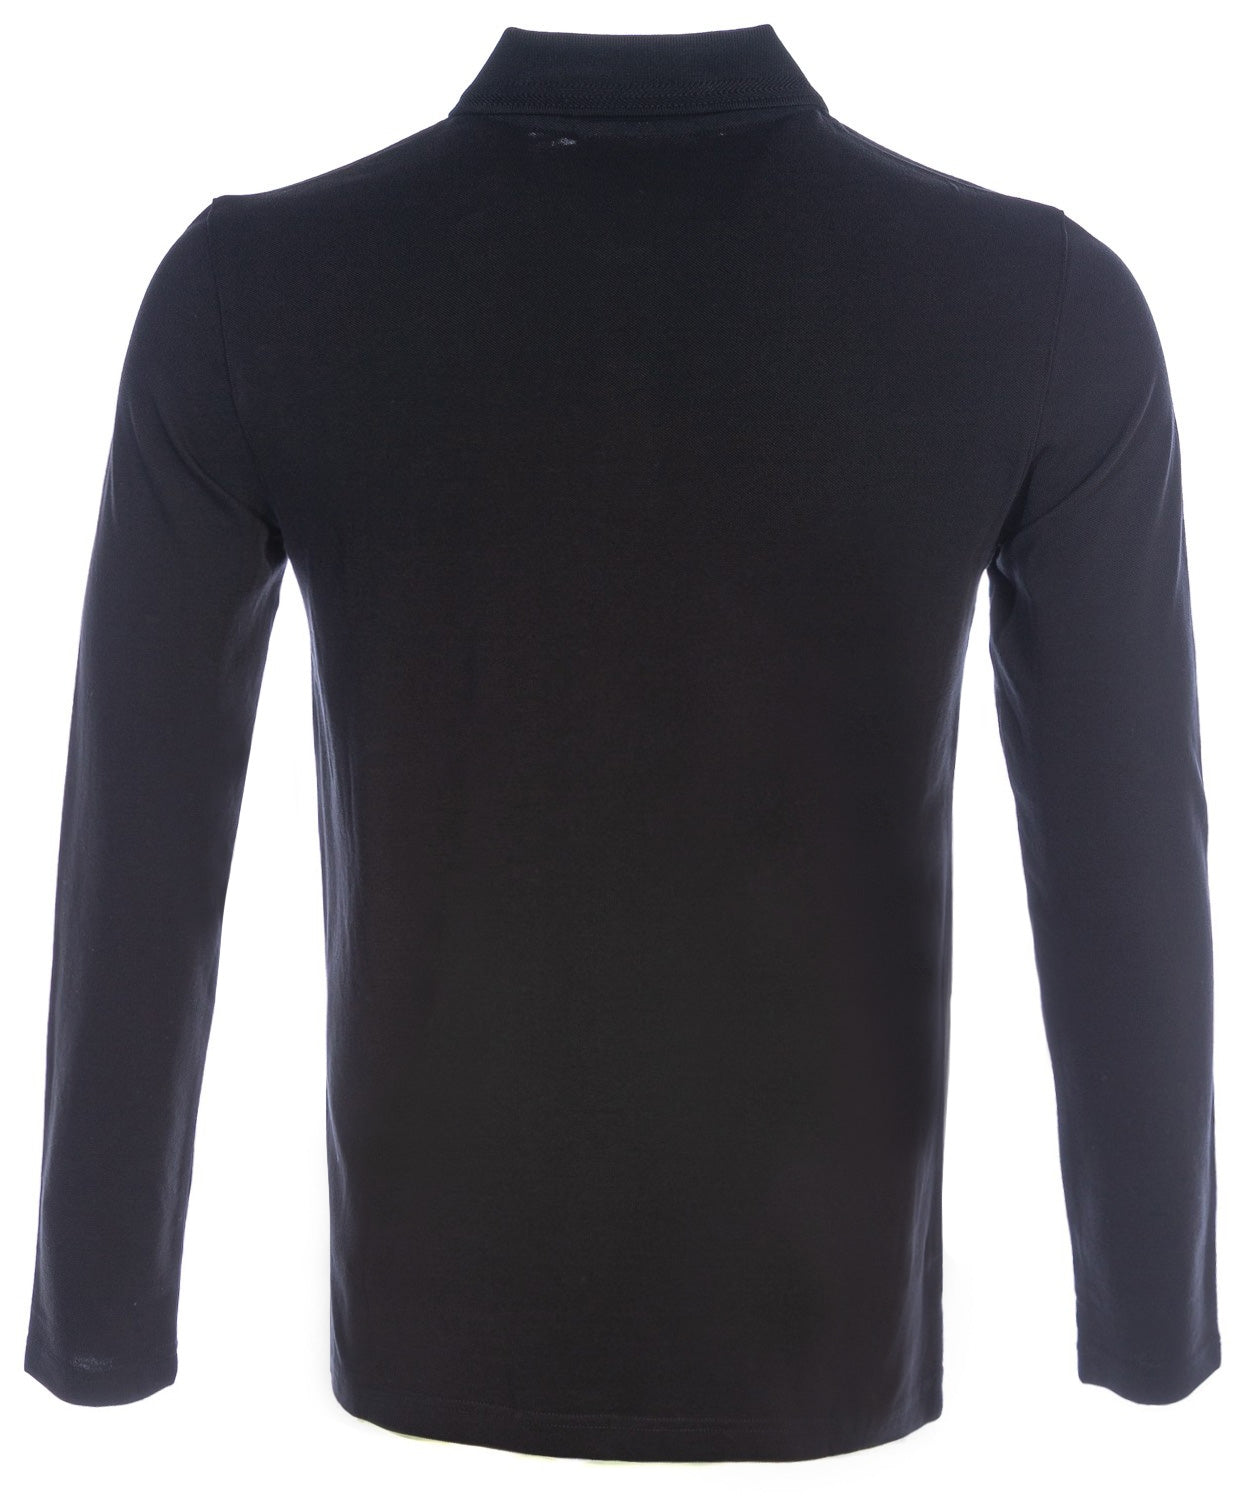 Belstaff Long Sleeve Polo Shirt in Black